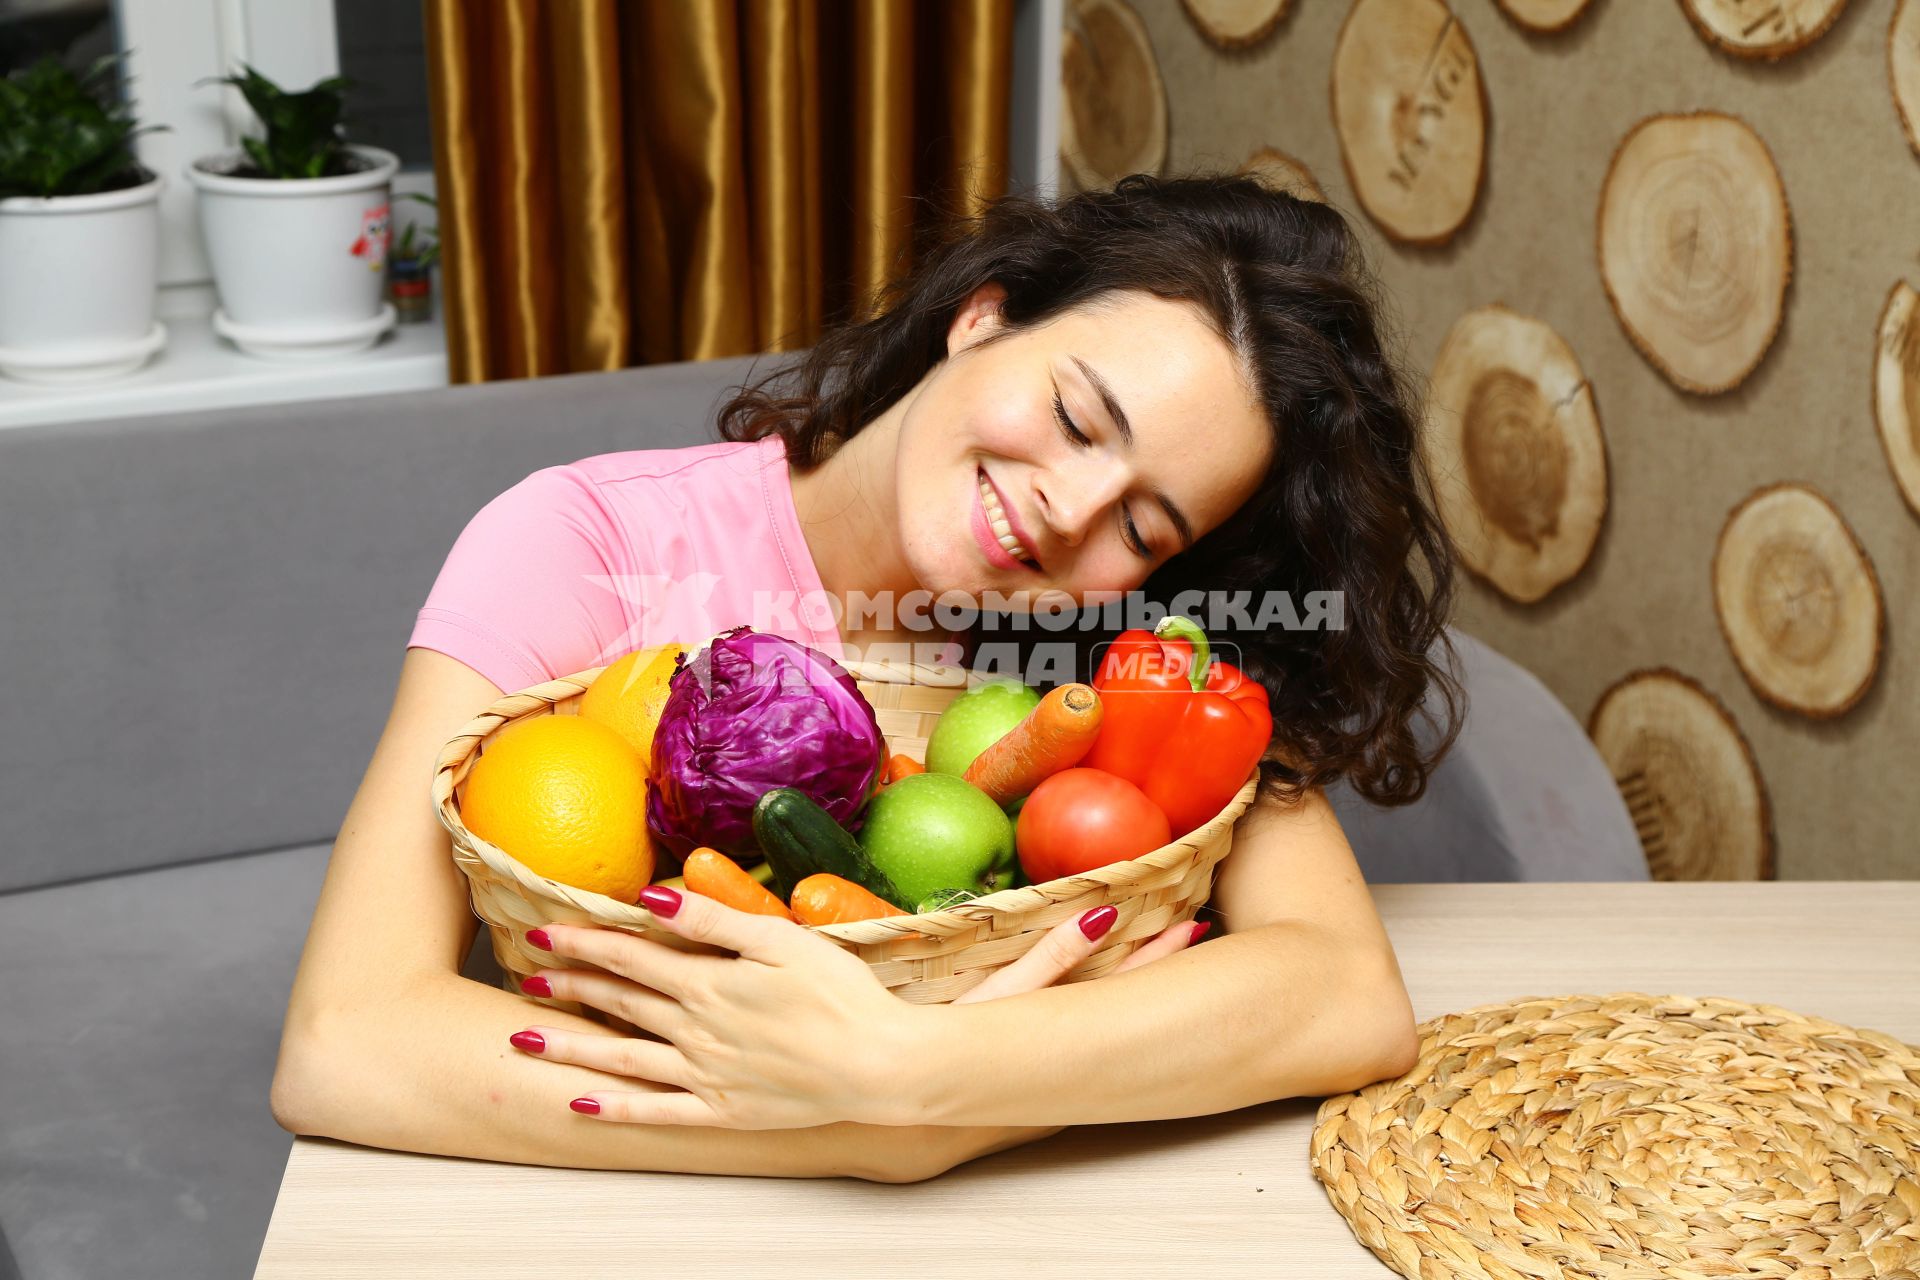 Москва. Девушка обнимает корзинку с овощами и фруктами.